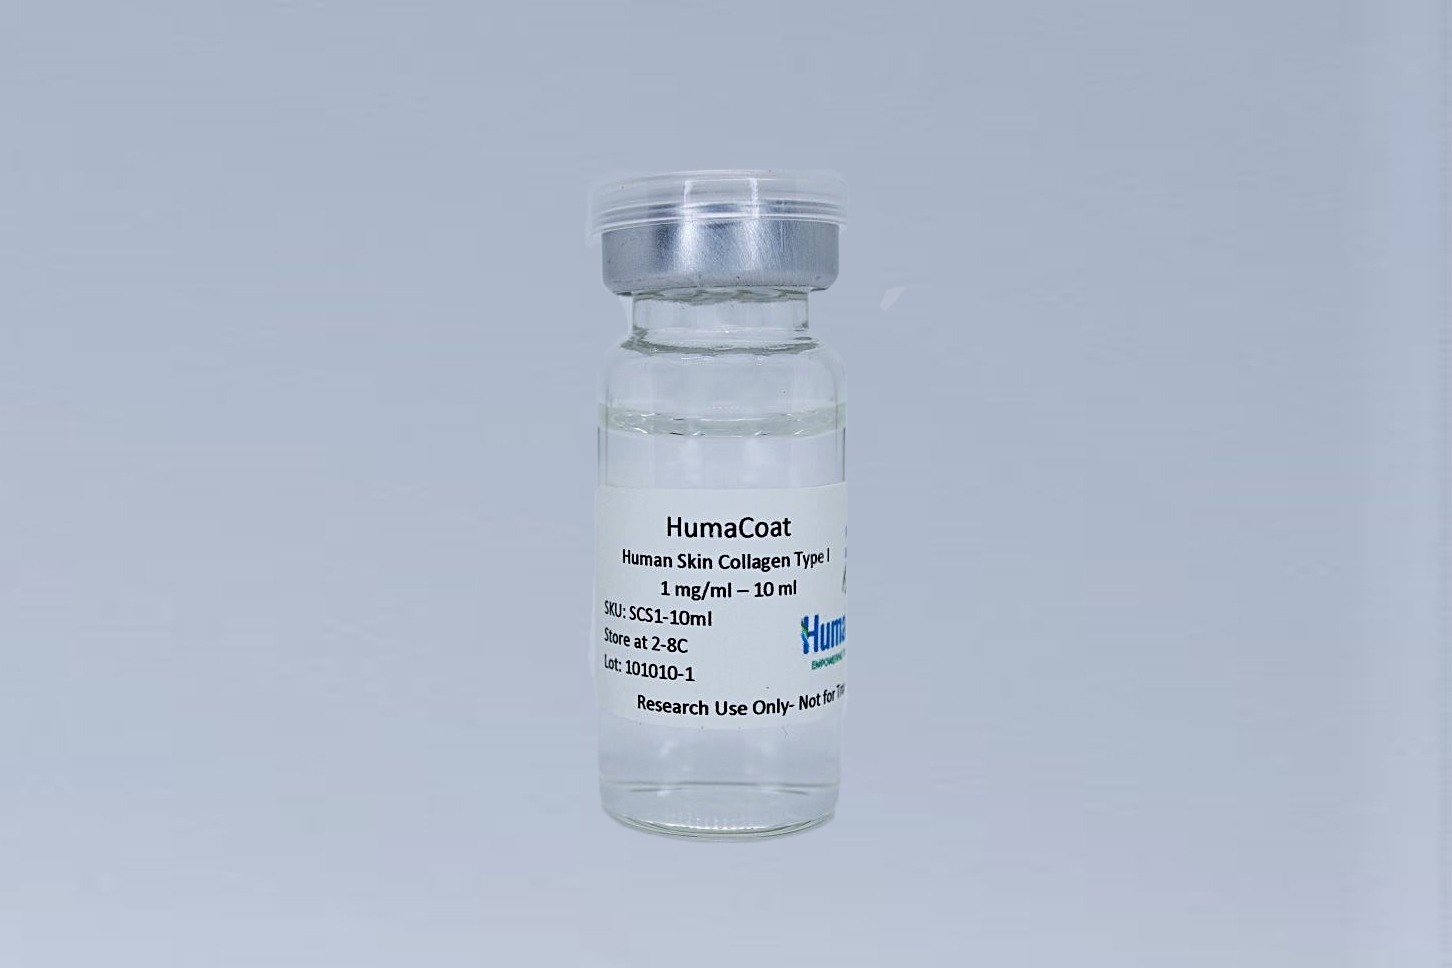 HumaCoat – Human Skin Collagen Type I